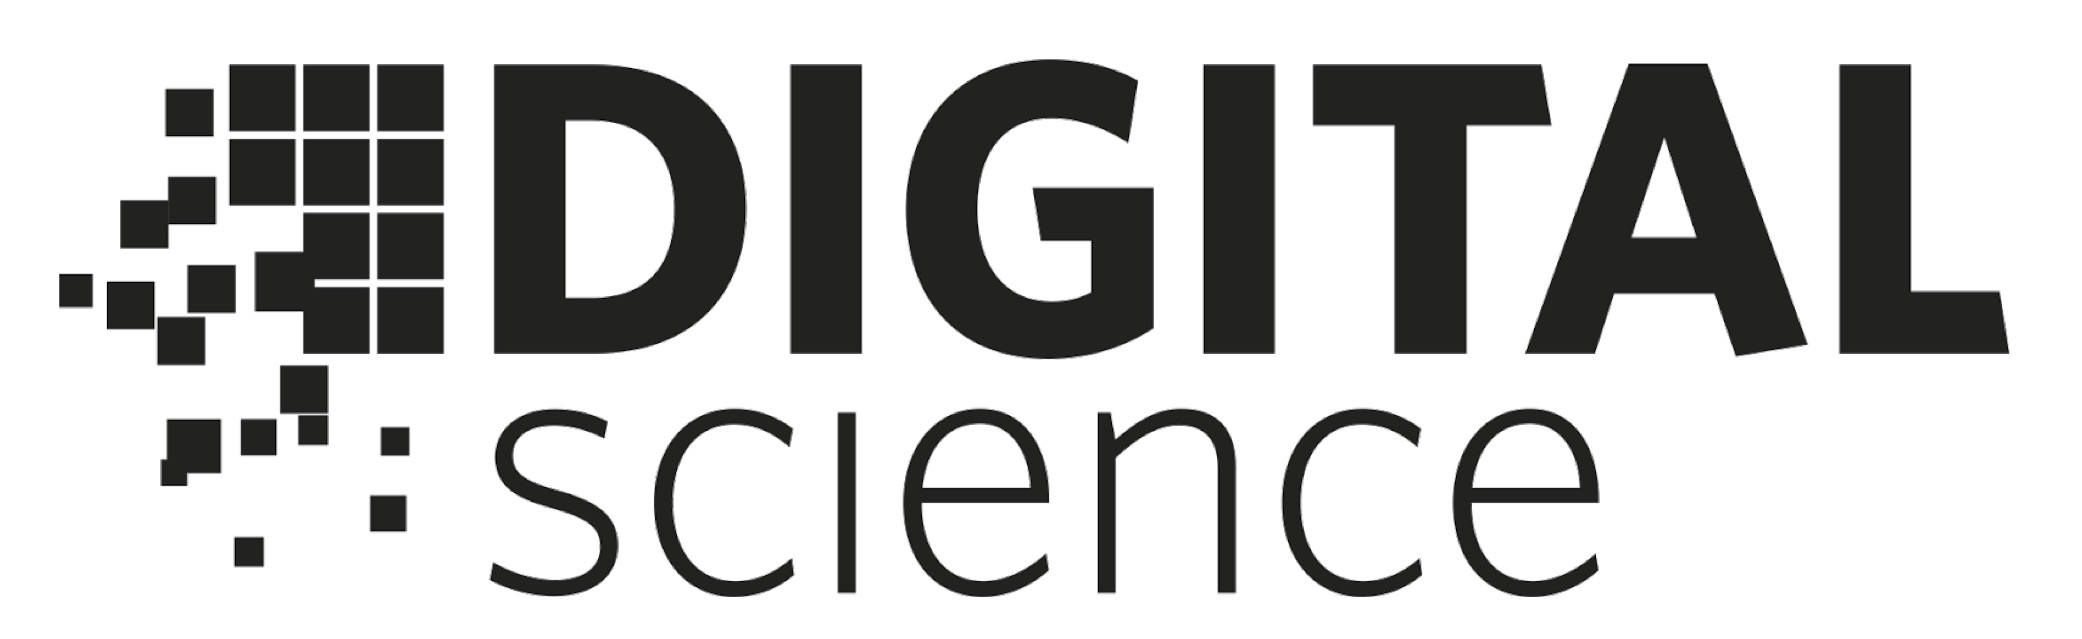 Digital logo. Логотипы цифровых компаний. I-Digital. Forum Digital логотип. Ен диджитал логотип.